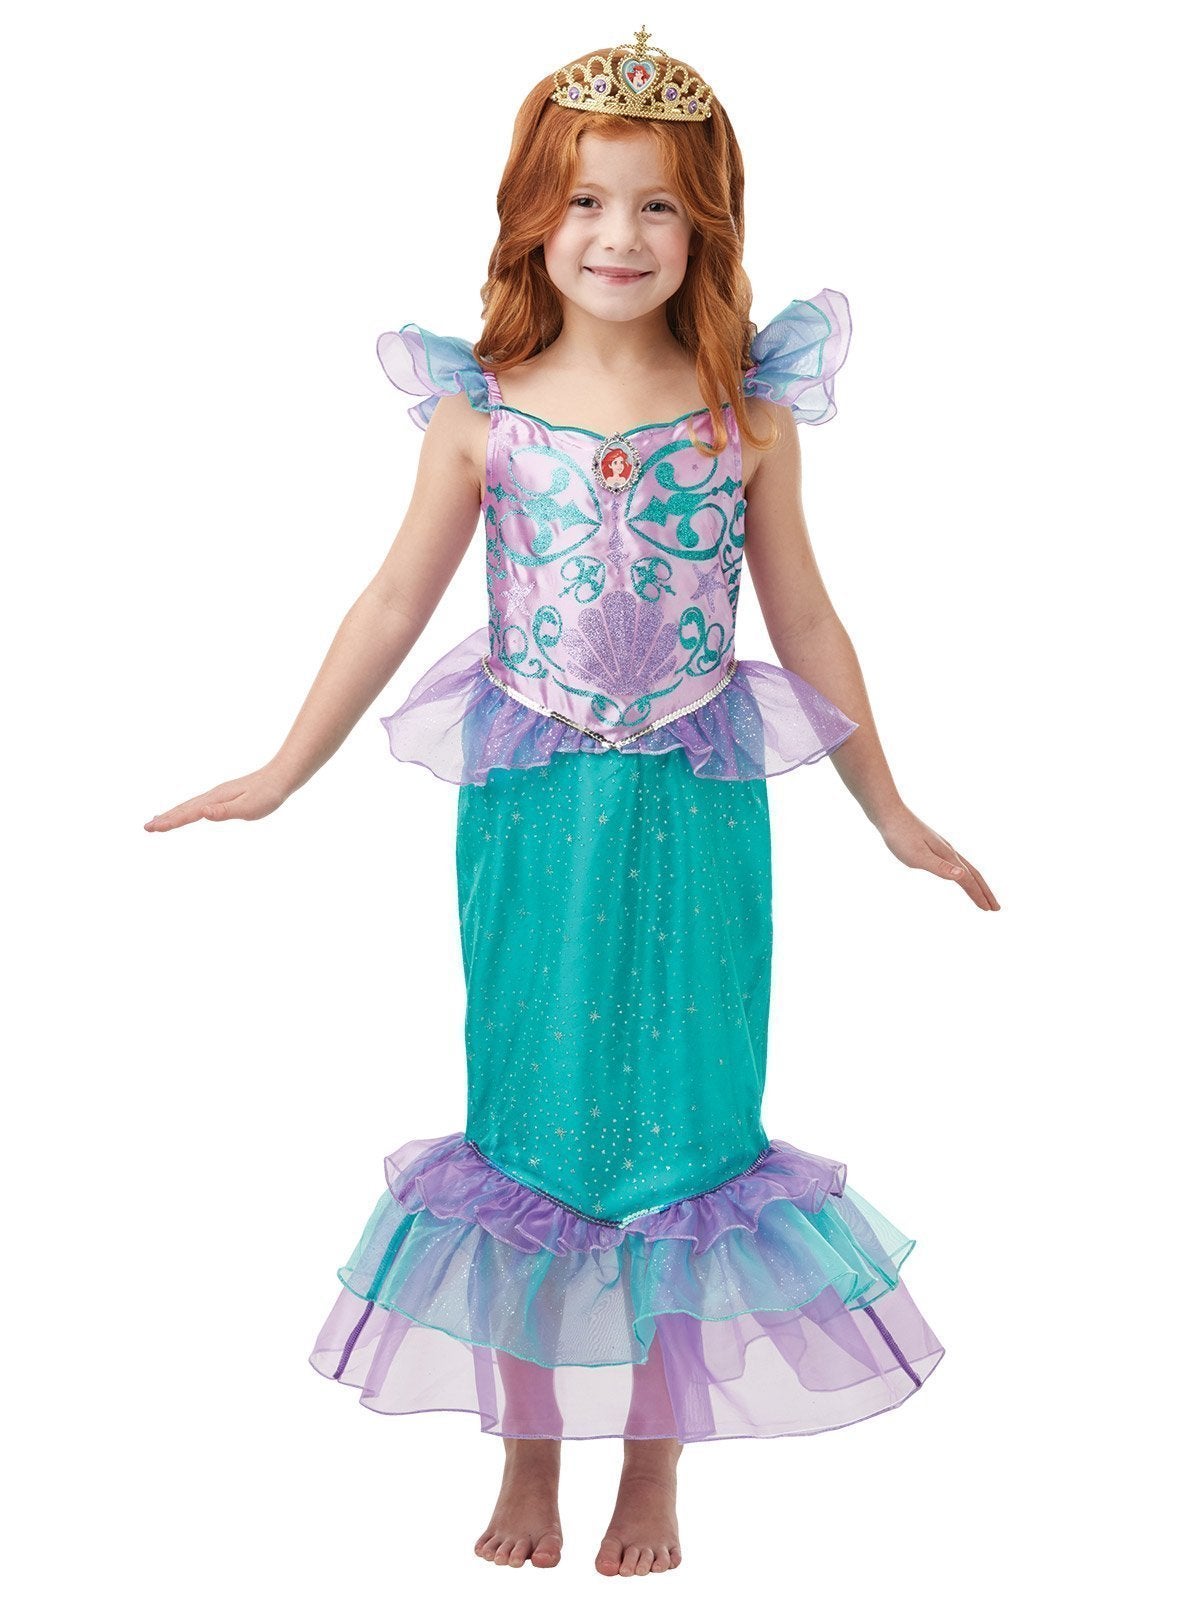 Ariel Glitter & Sparkle Costume for Kids - Disney The Little Mermaid